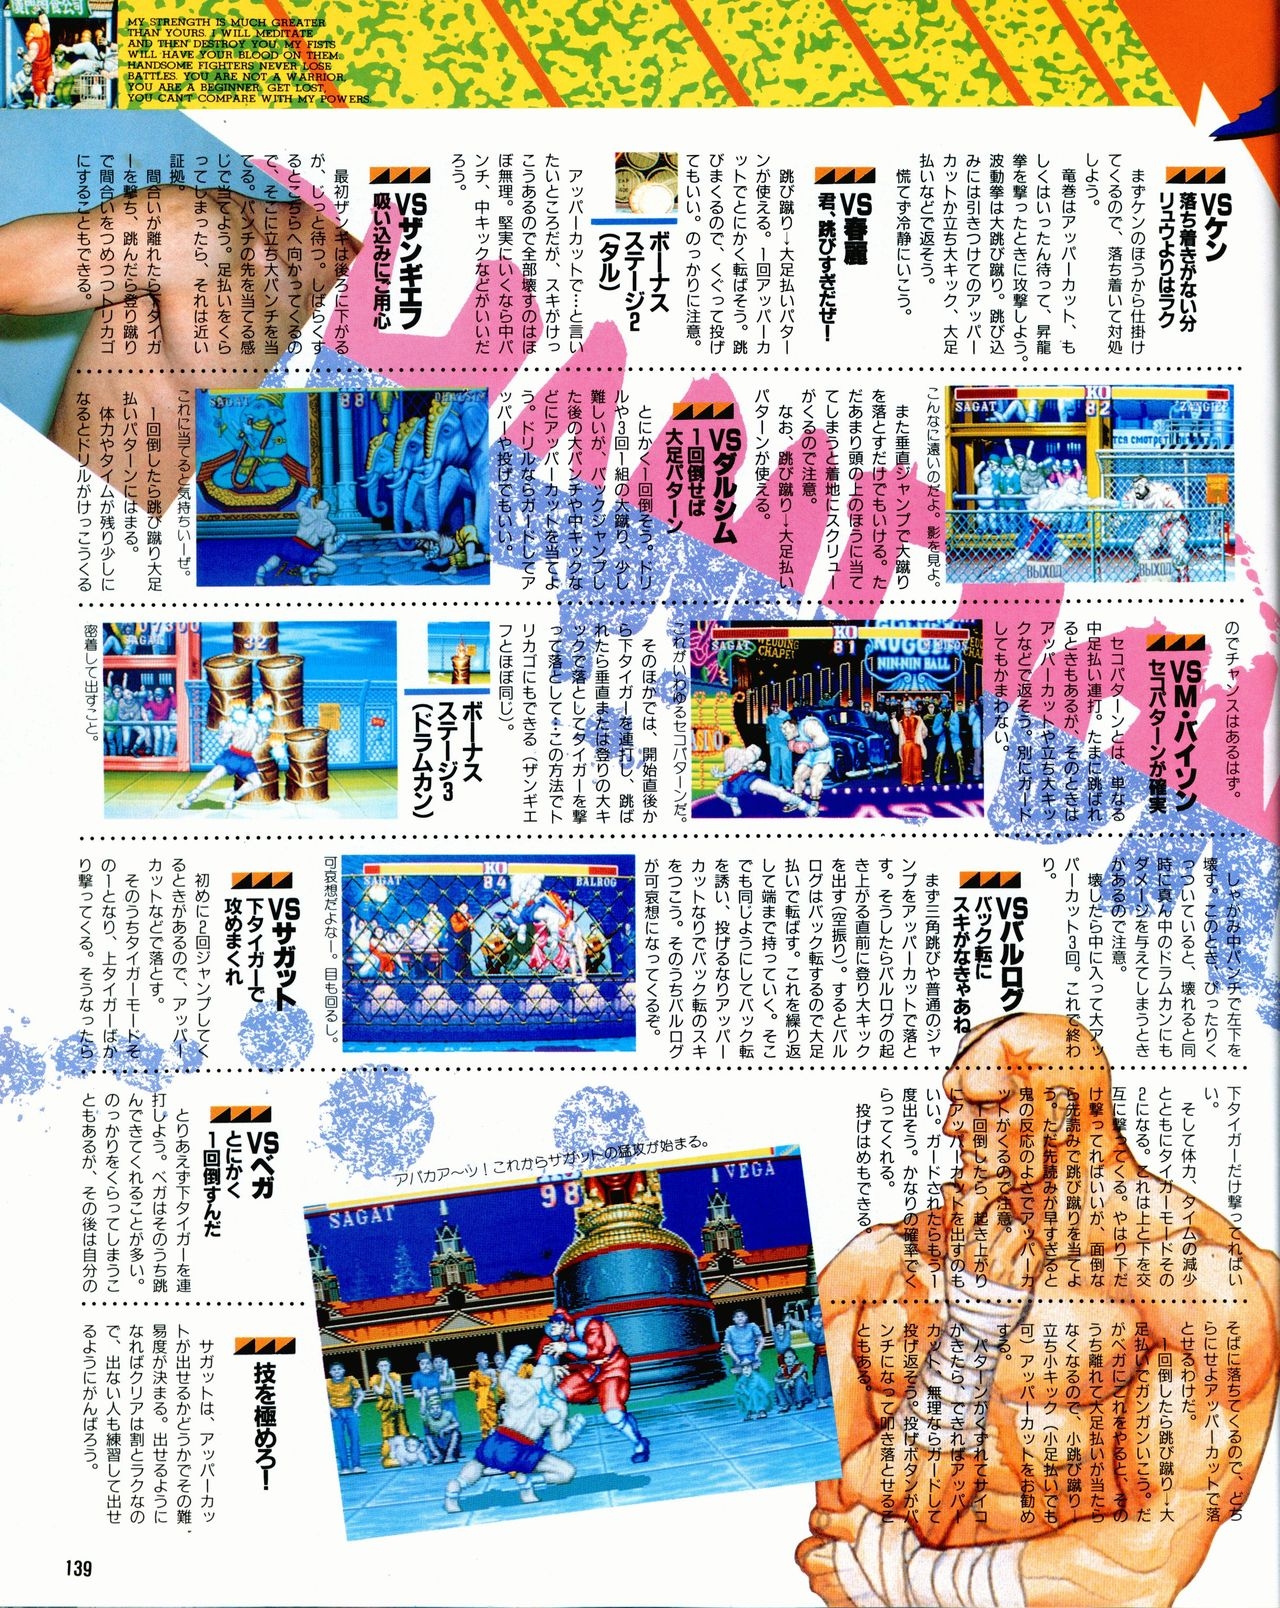 Street Fighter II Dash - Gamest special issue 77 140